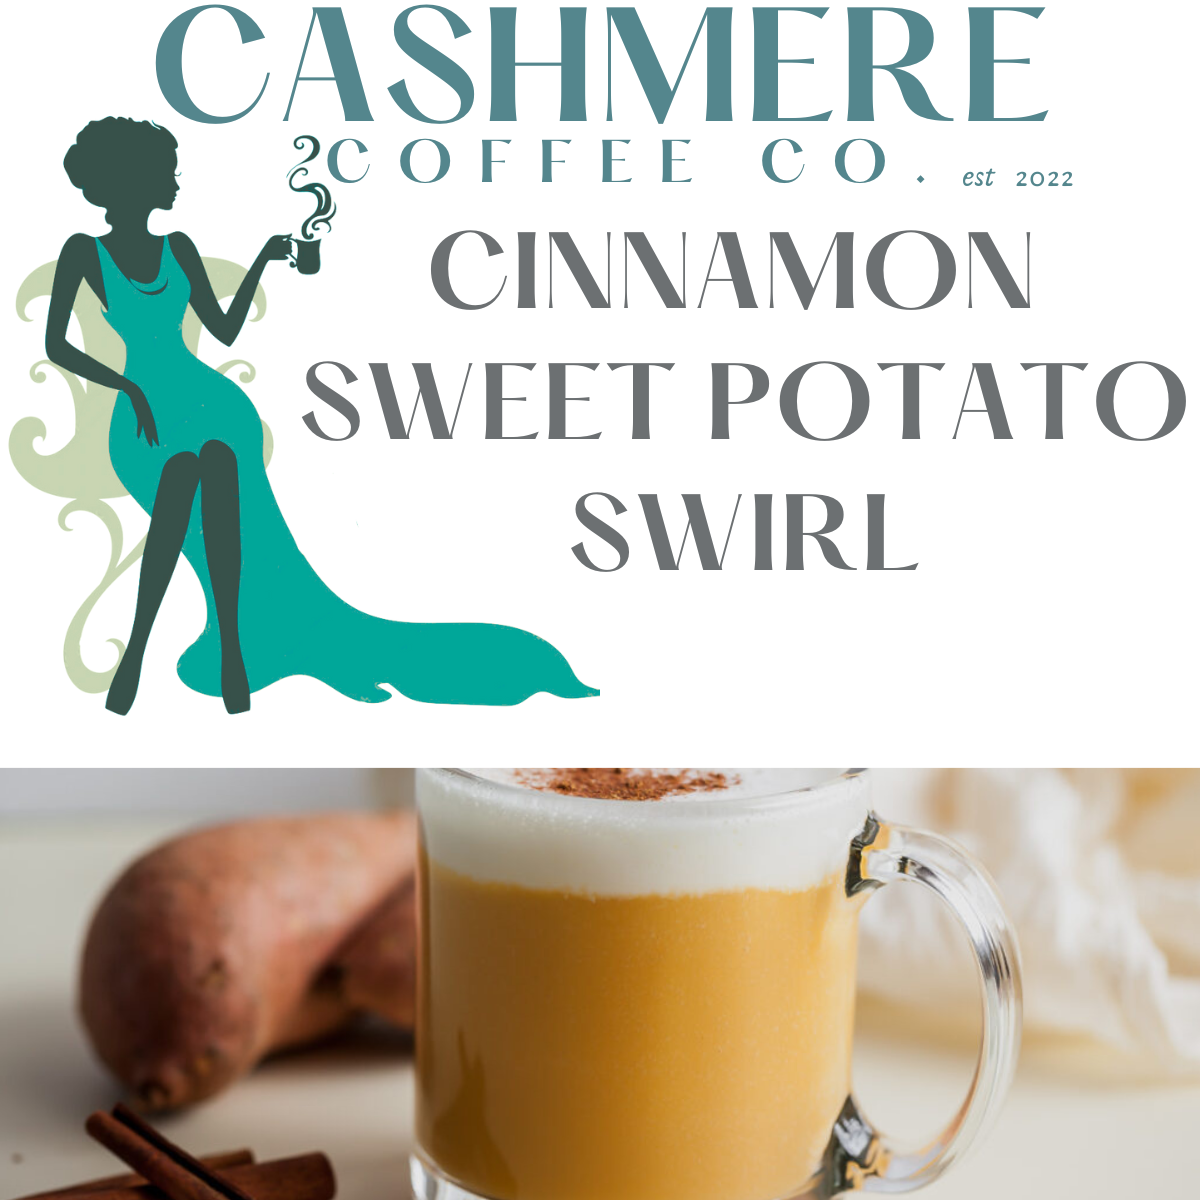 Cinnamon Sweet Potato Swirl